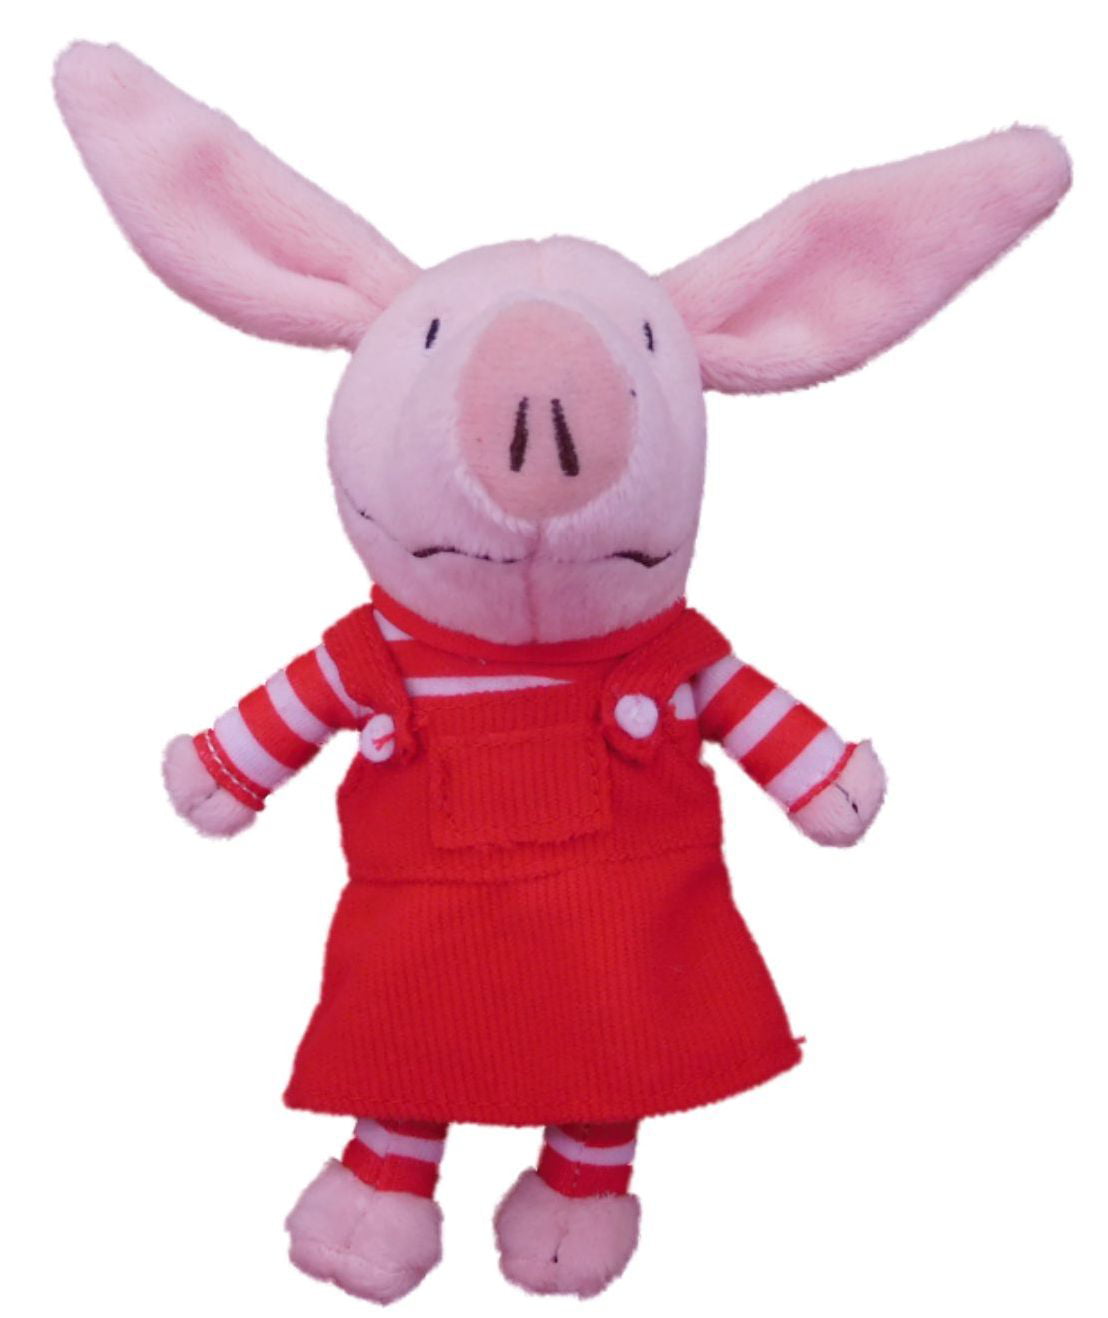 Aliexpress.com : Buy 12style/lot 22cm Olivia the Pig Puppet Pajamas